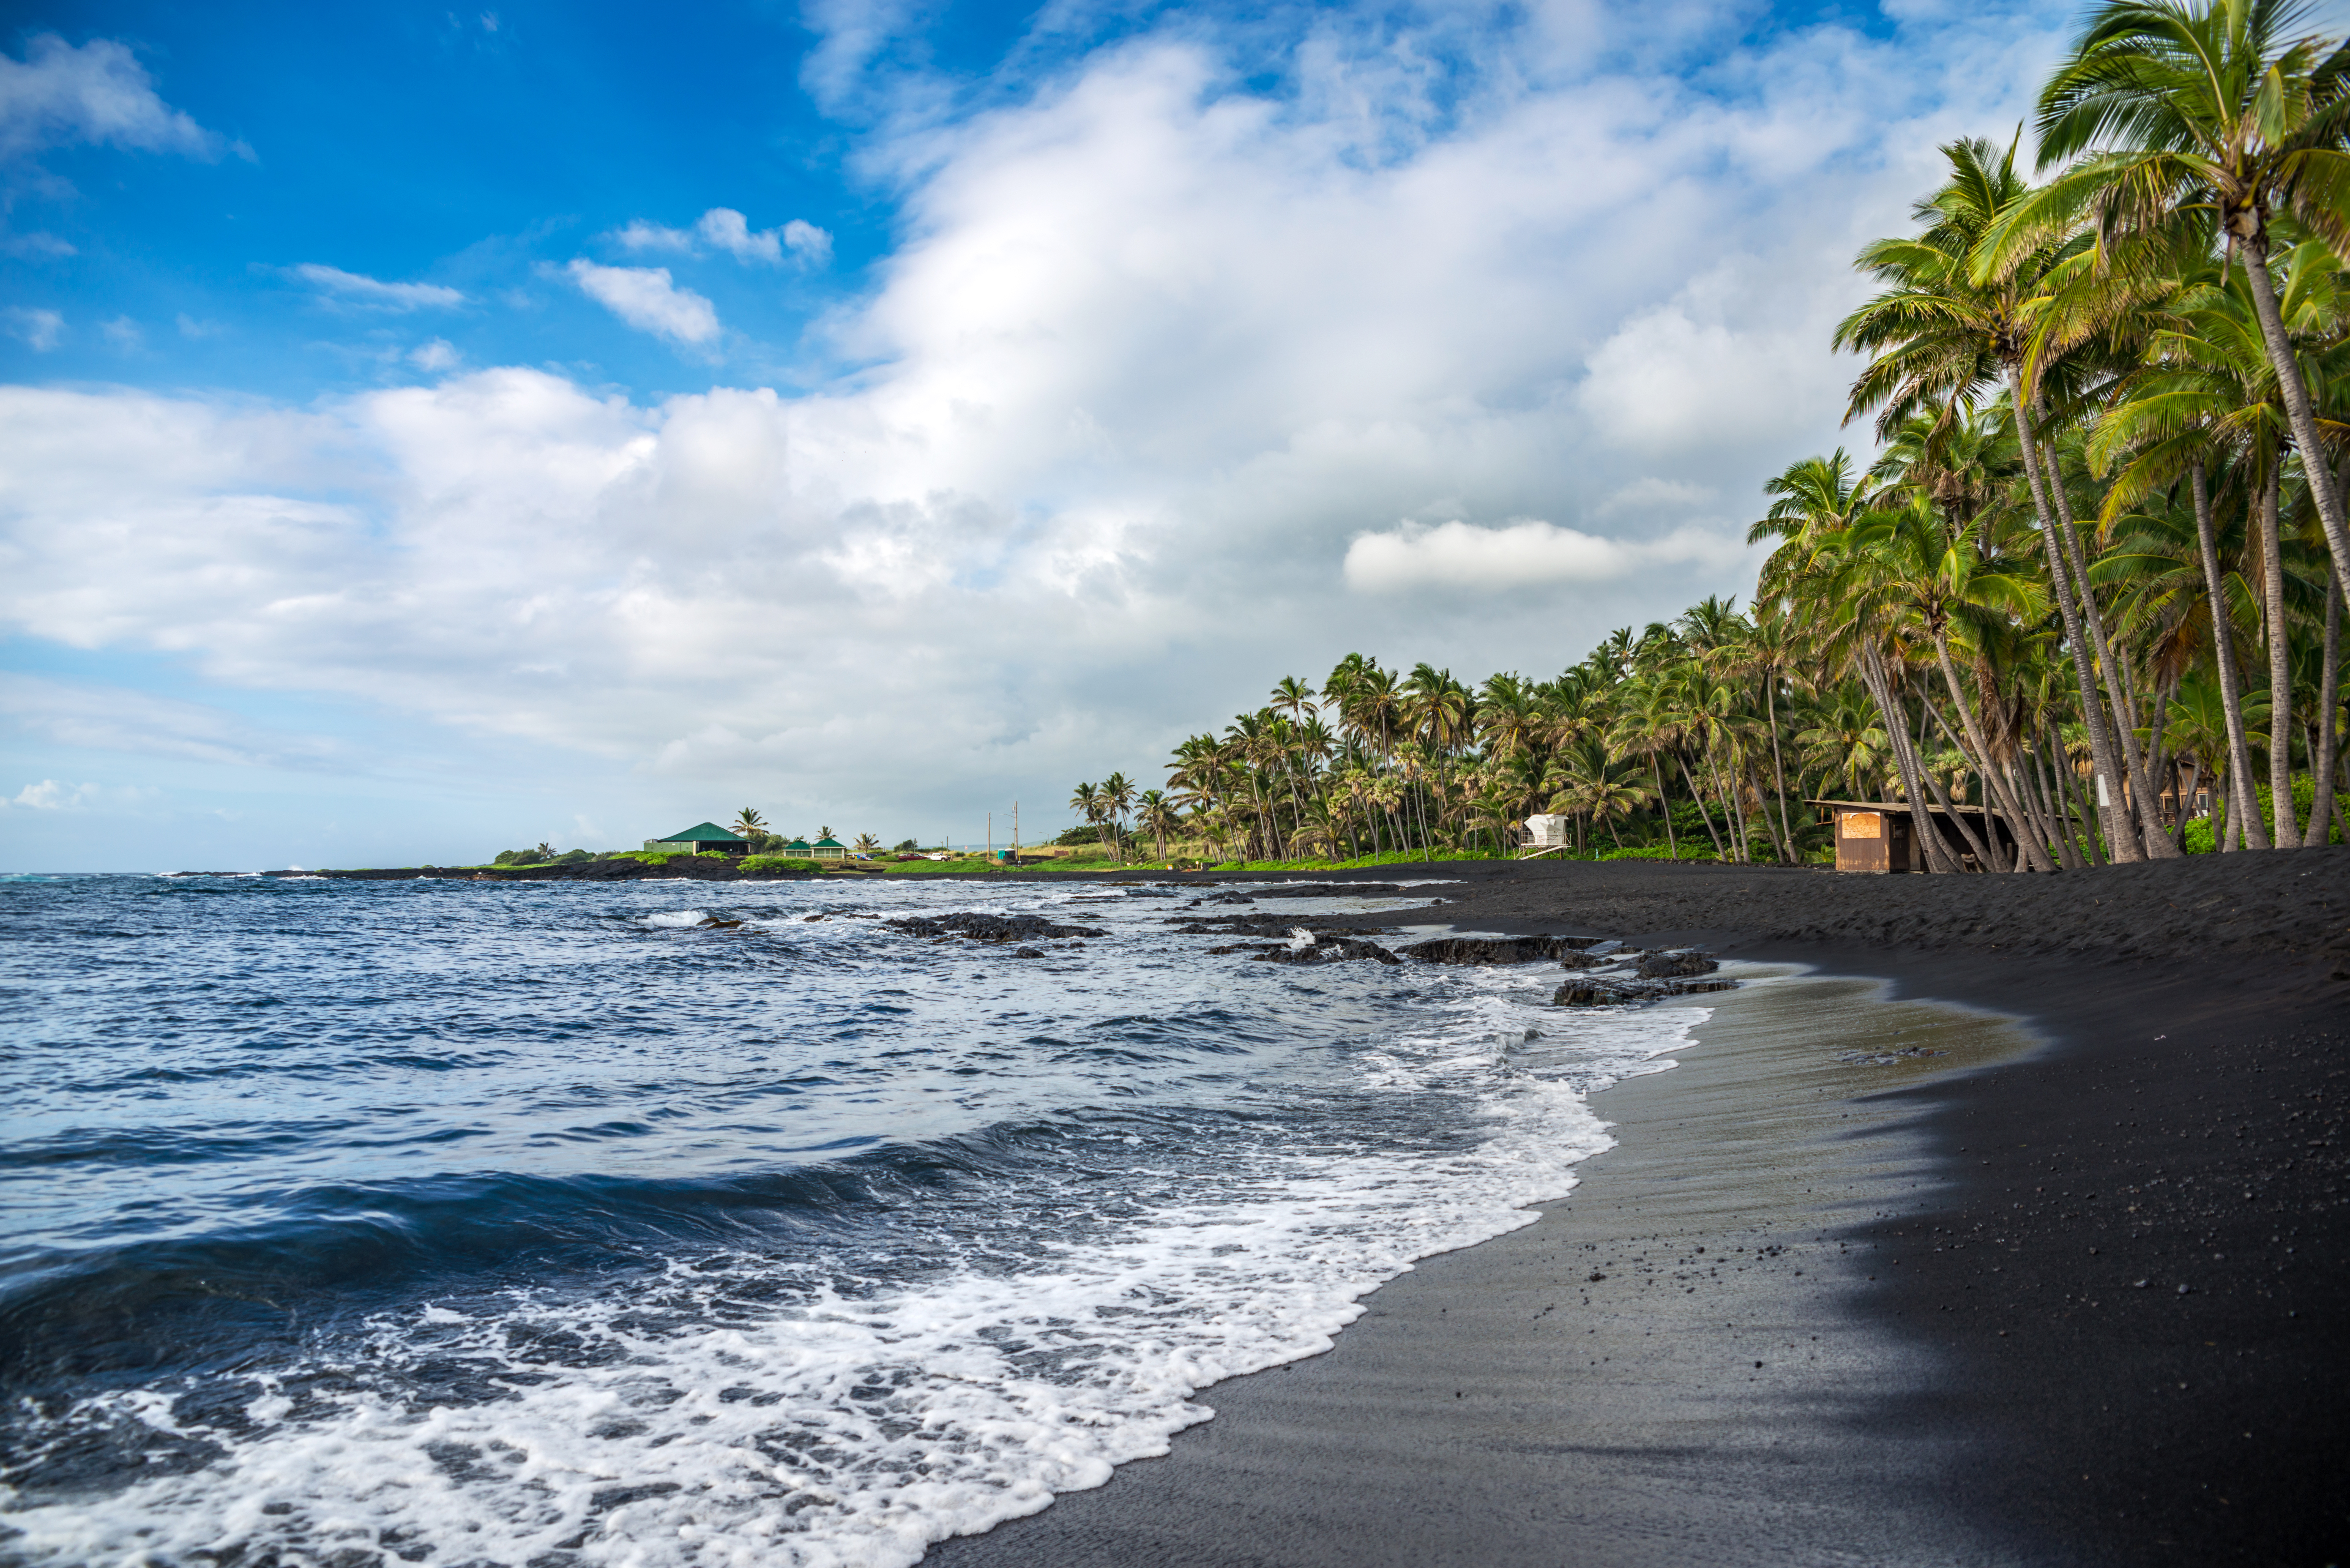 Volcanic Beaches to Visit - Punalu'u Beach in Hawaii